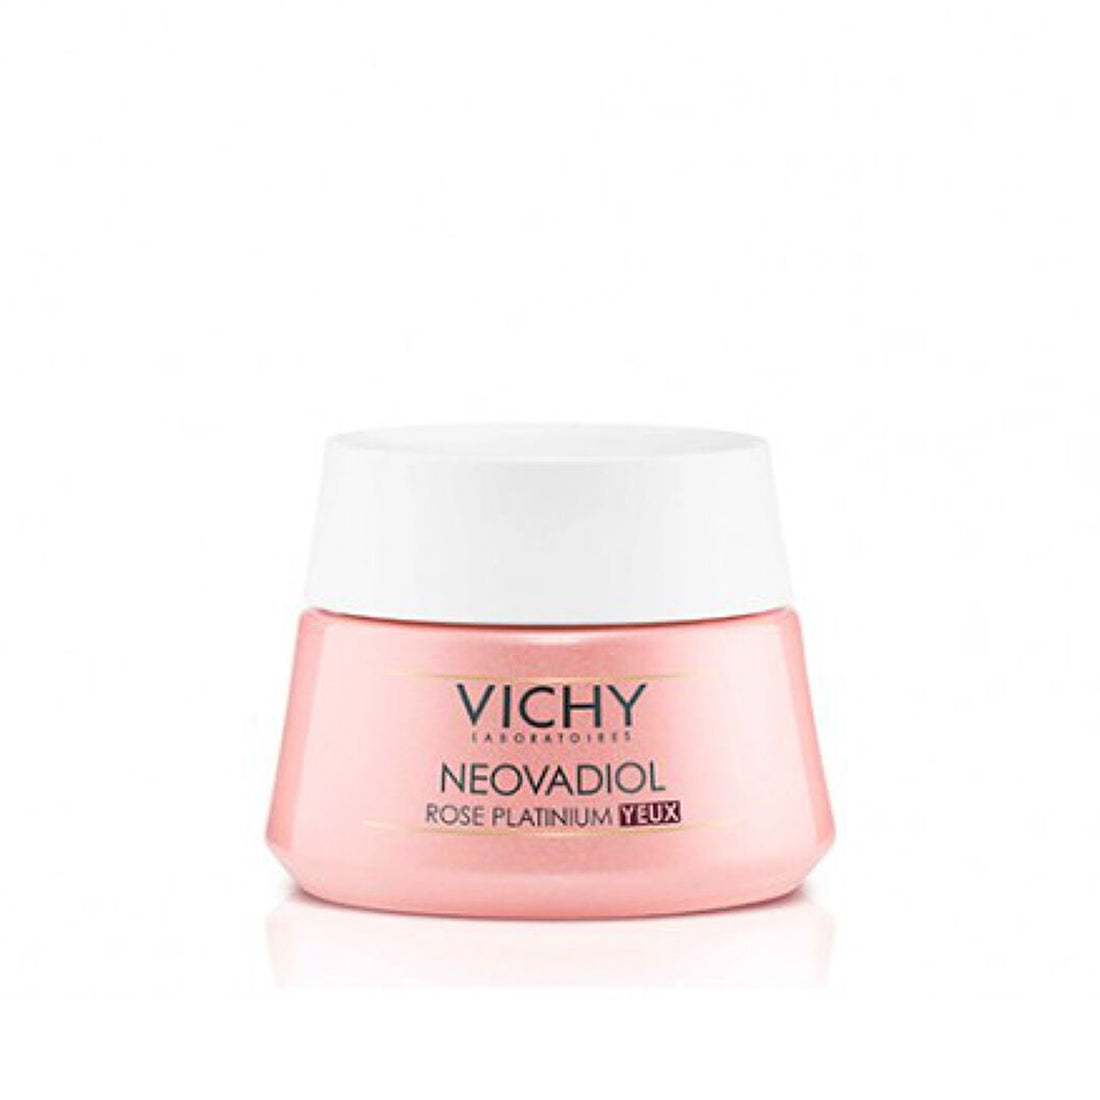 Vichy Neovadiol Crème Anti-Âge Yeux Rose Platine 15 Ml